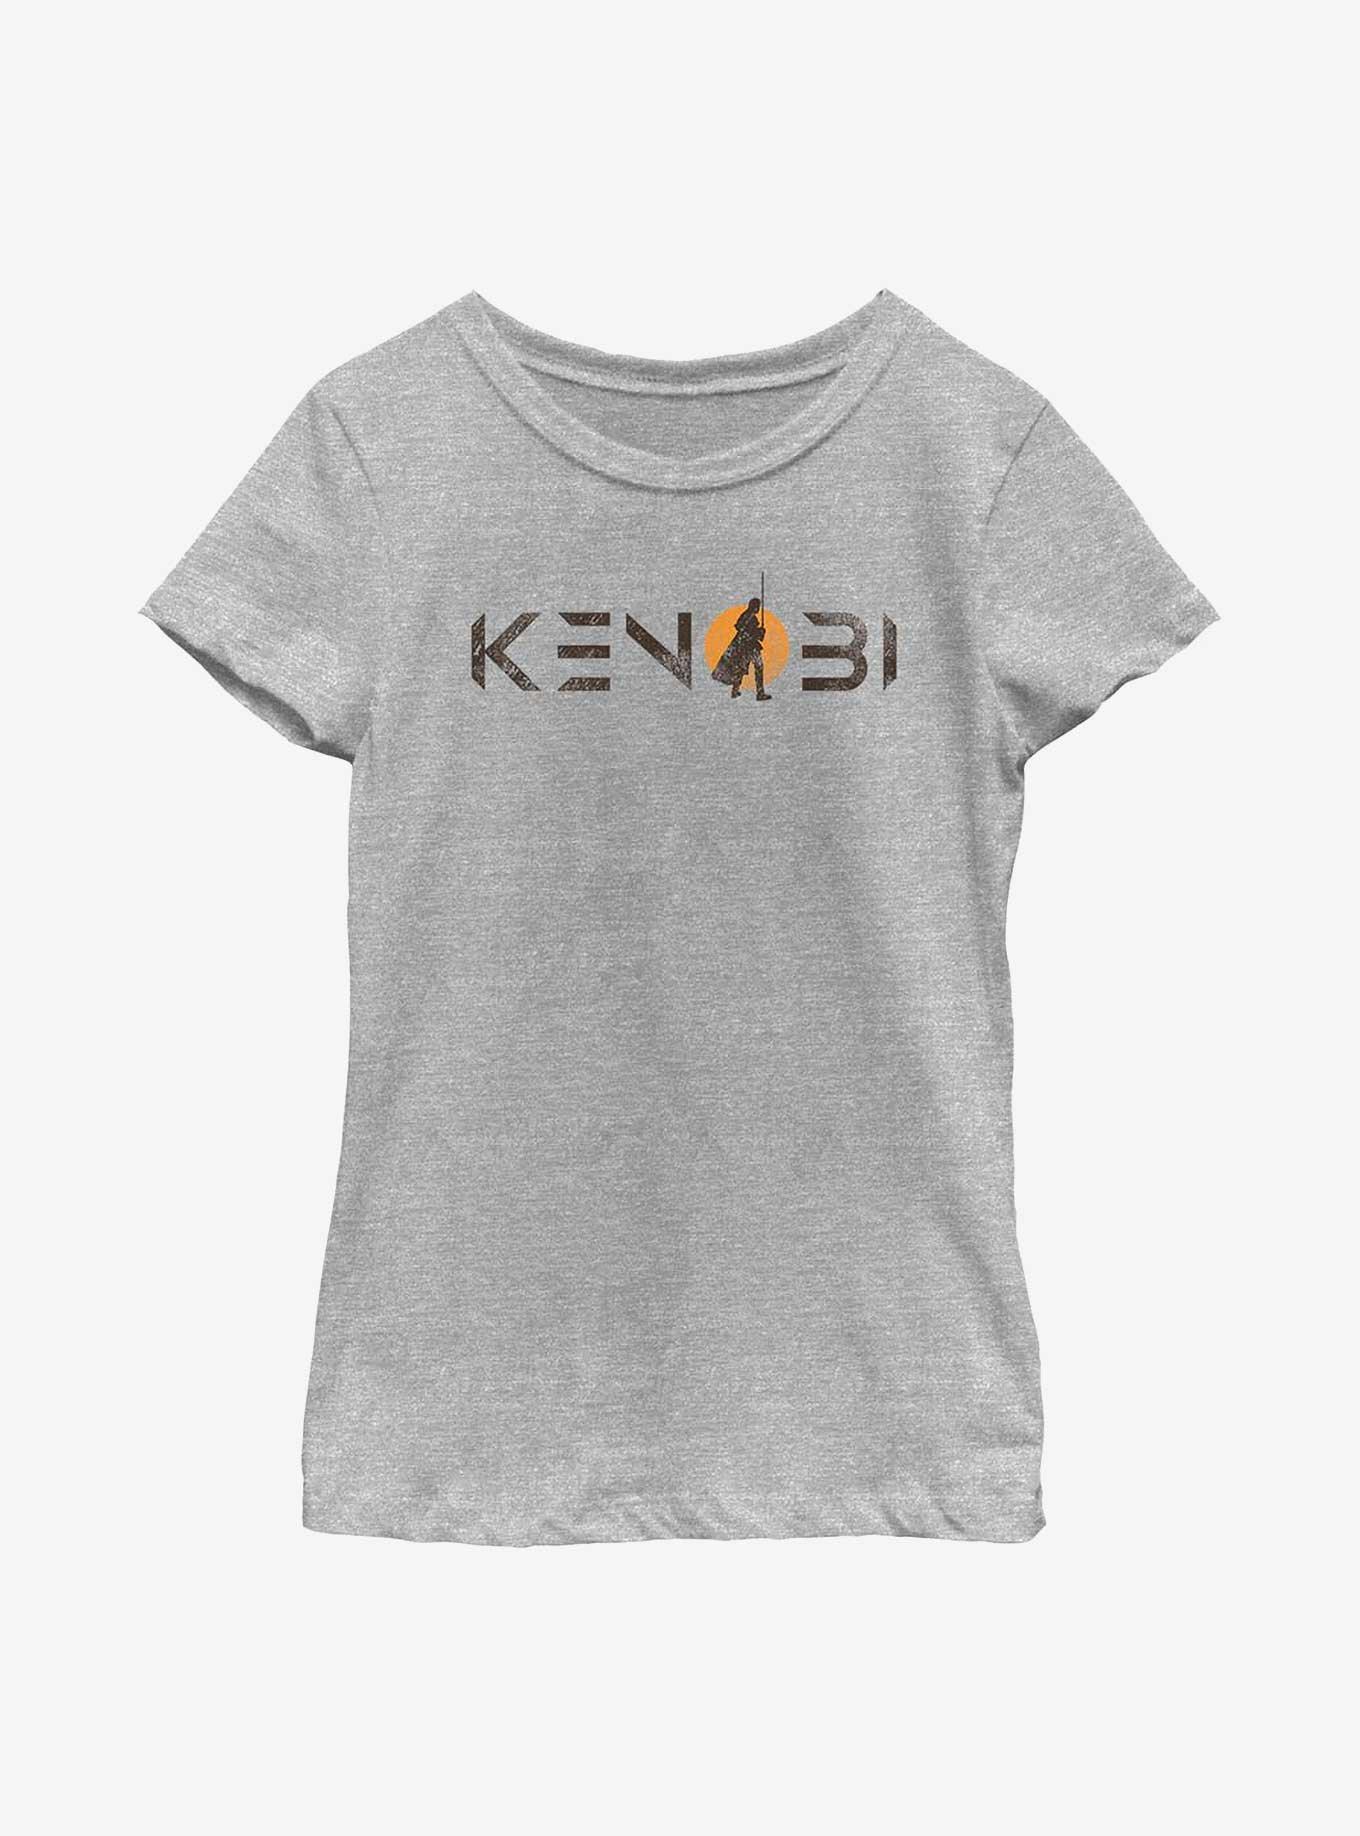 Star Wars Obi-Wan Kenobi Single Sun Logo Youth Girls T-Shirt, ATH HTR, hi-res